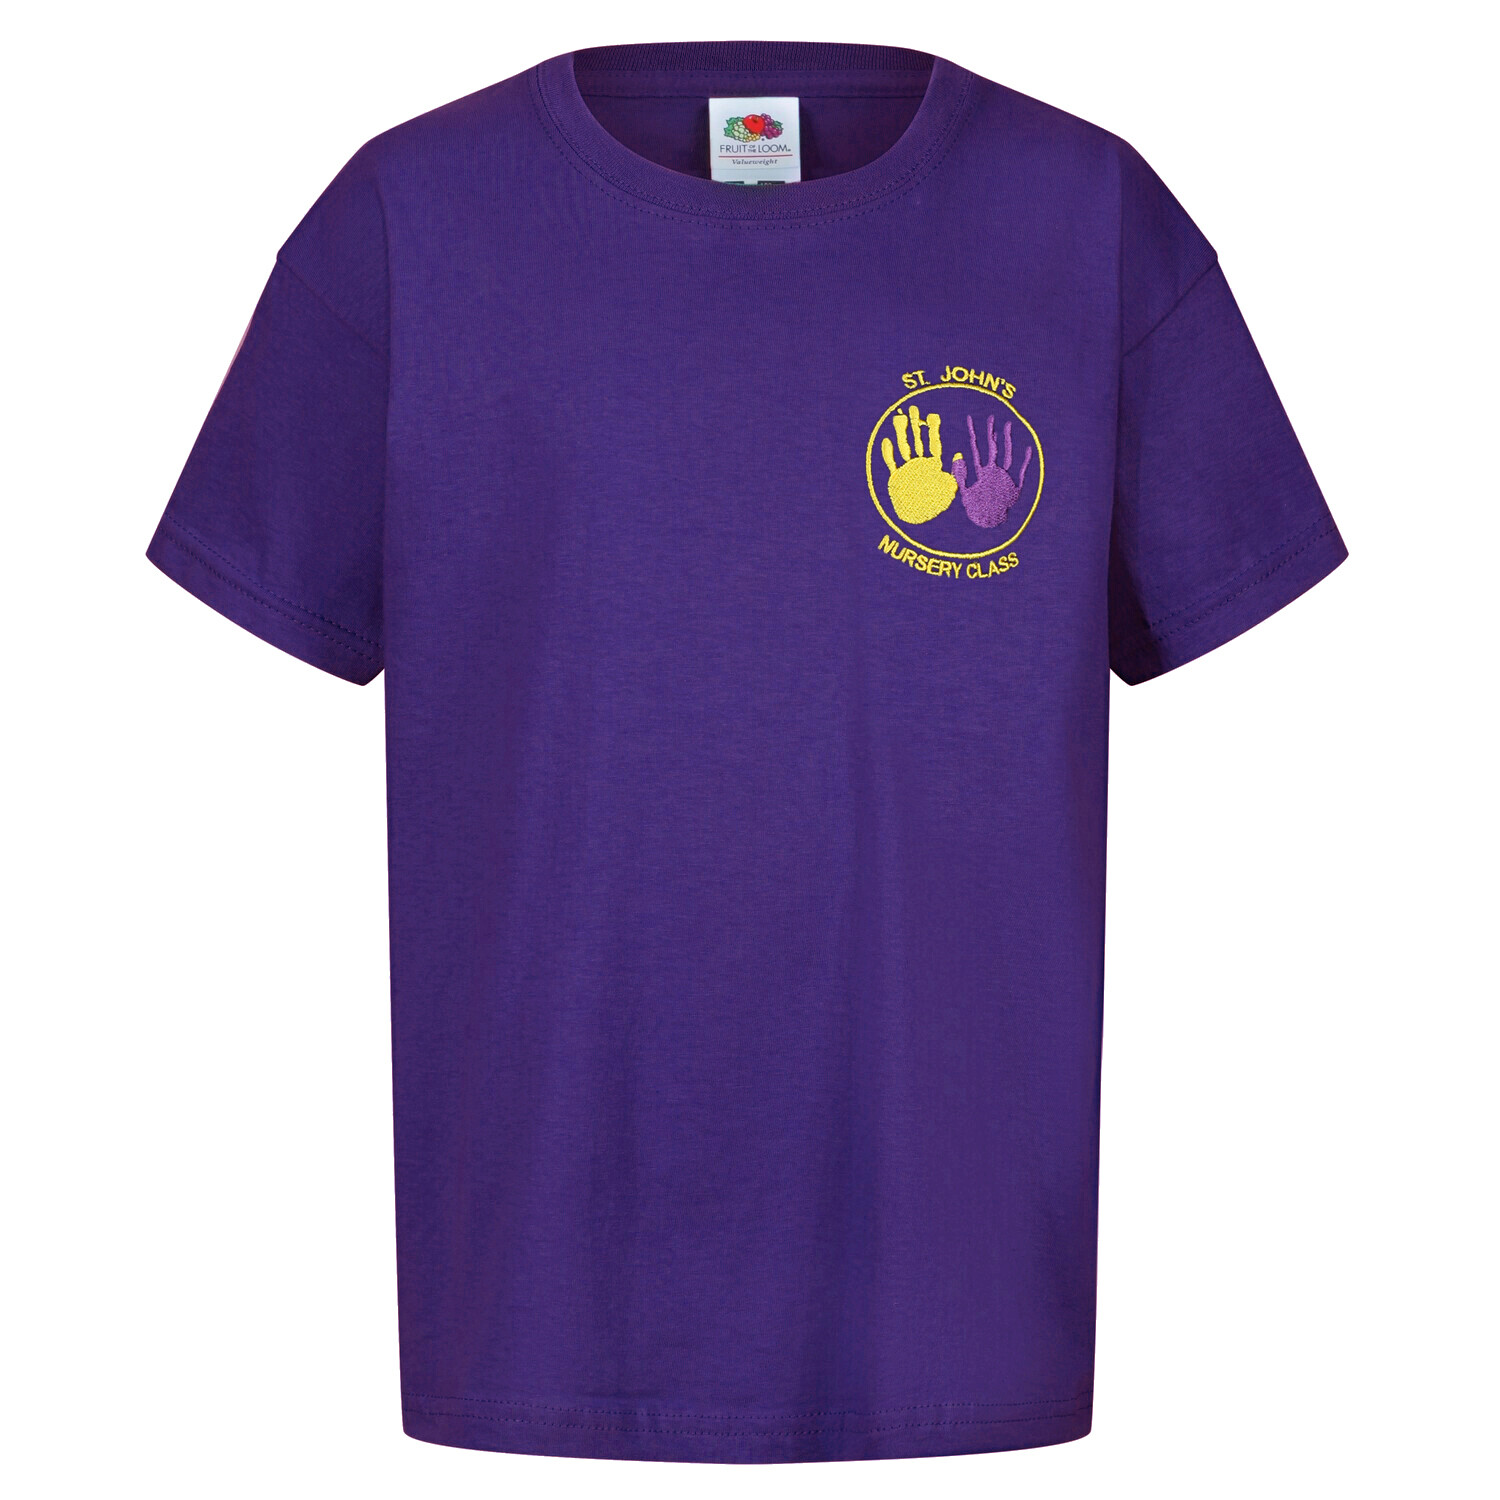 St John's Nursery Staff T-Shirt (Unisex) (RCS5000)